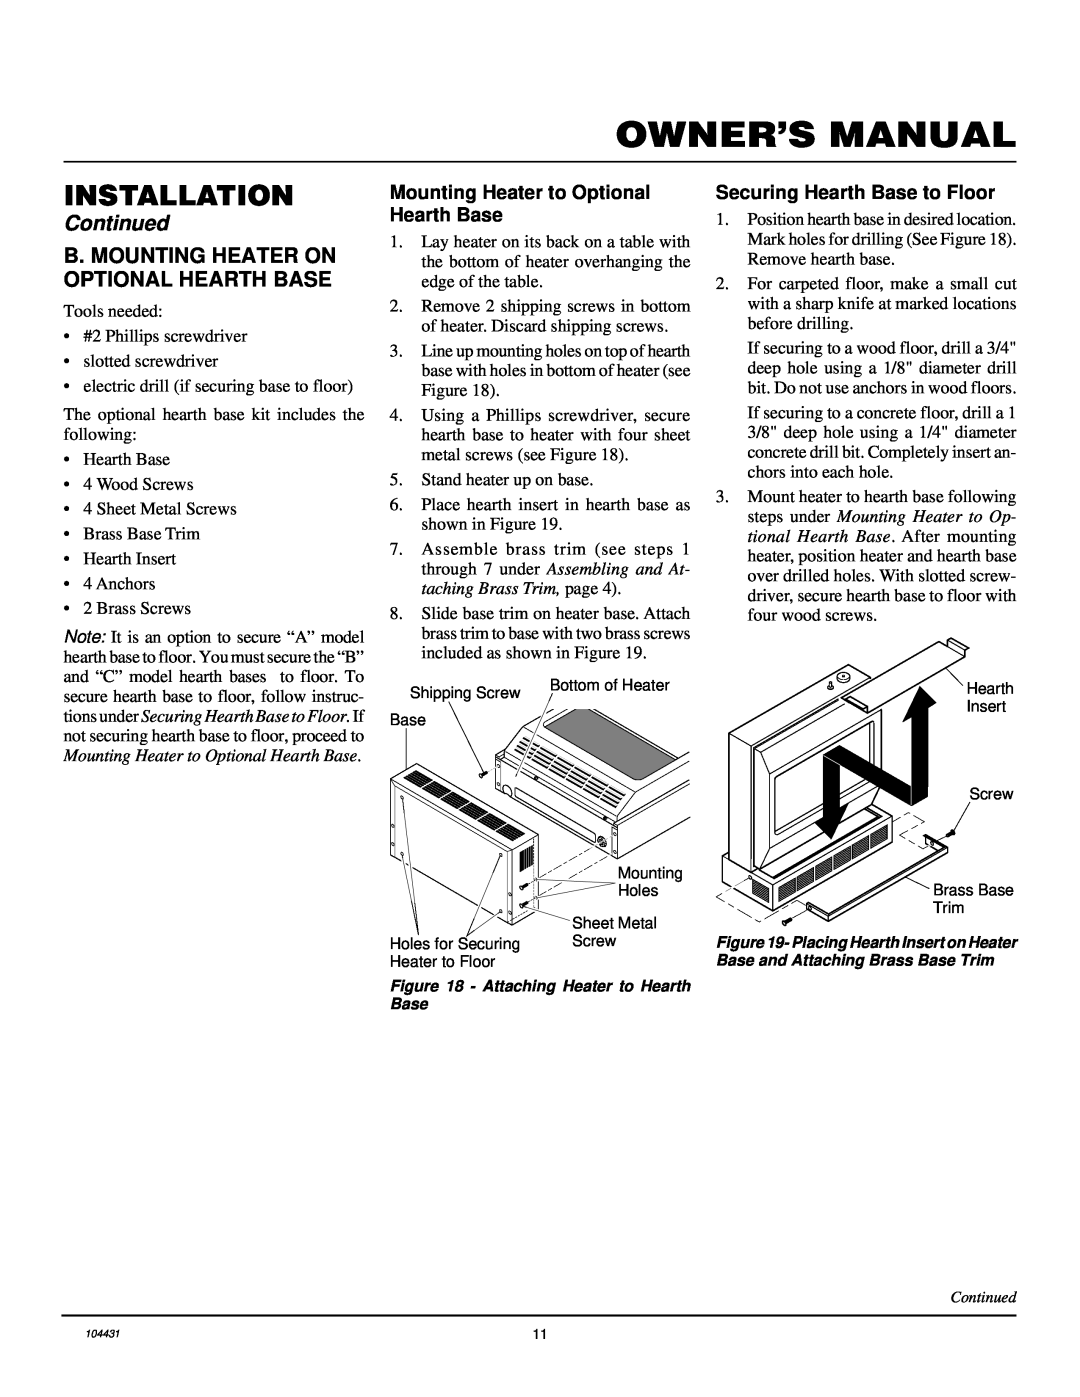 Vanguard Heating VMH3000TN installation manual B. Mounting Heater On Optional Hearth Base, Installation, Continued 